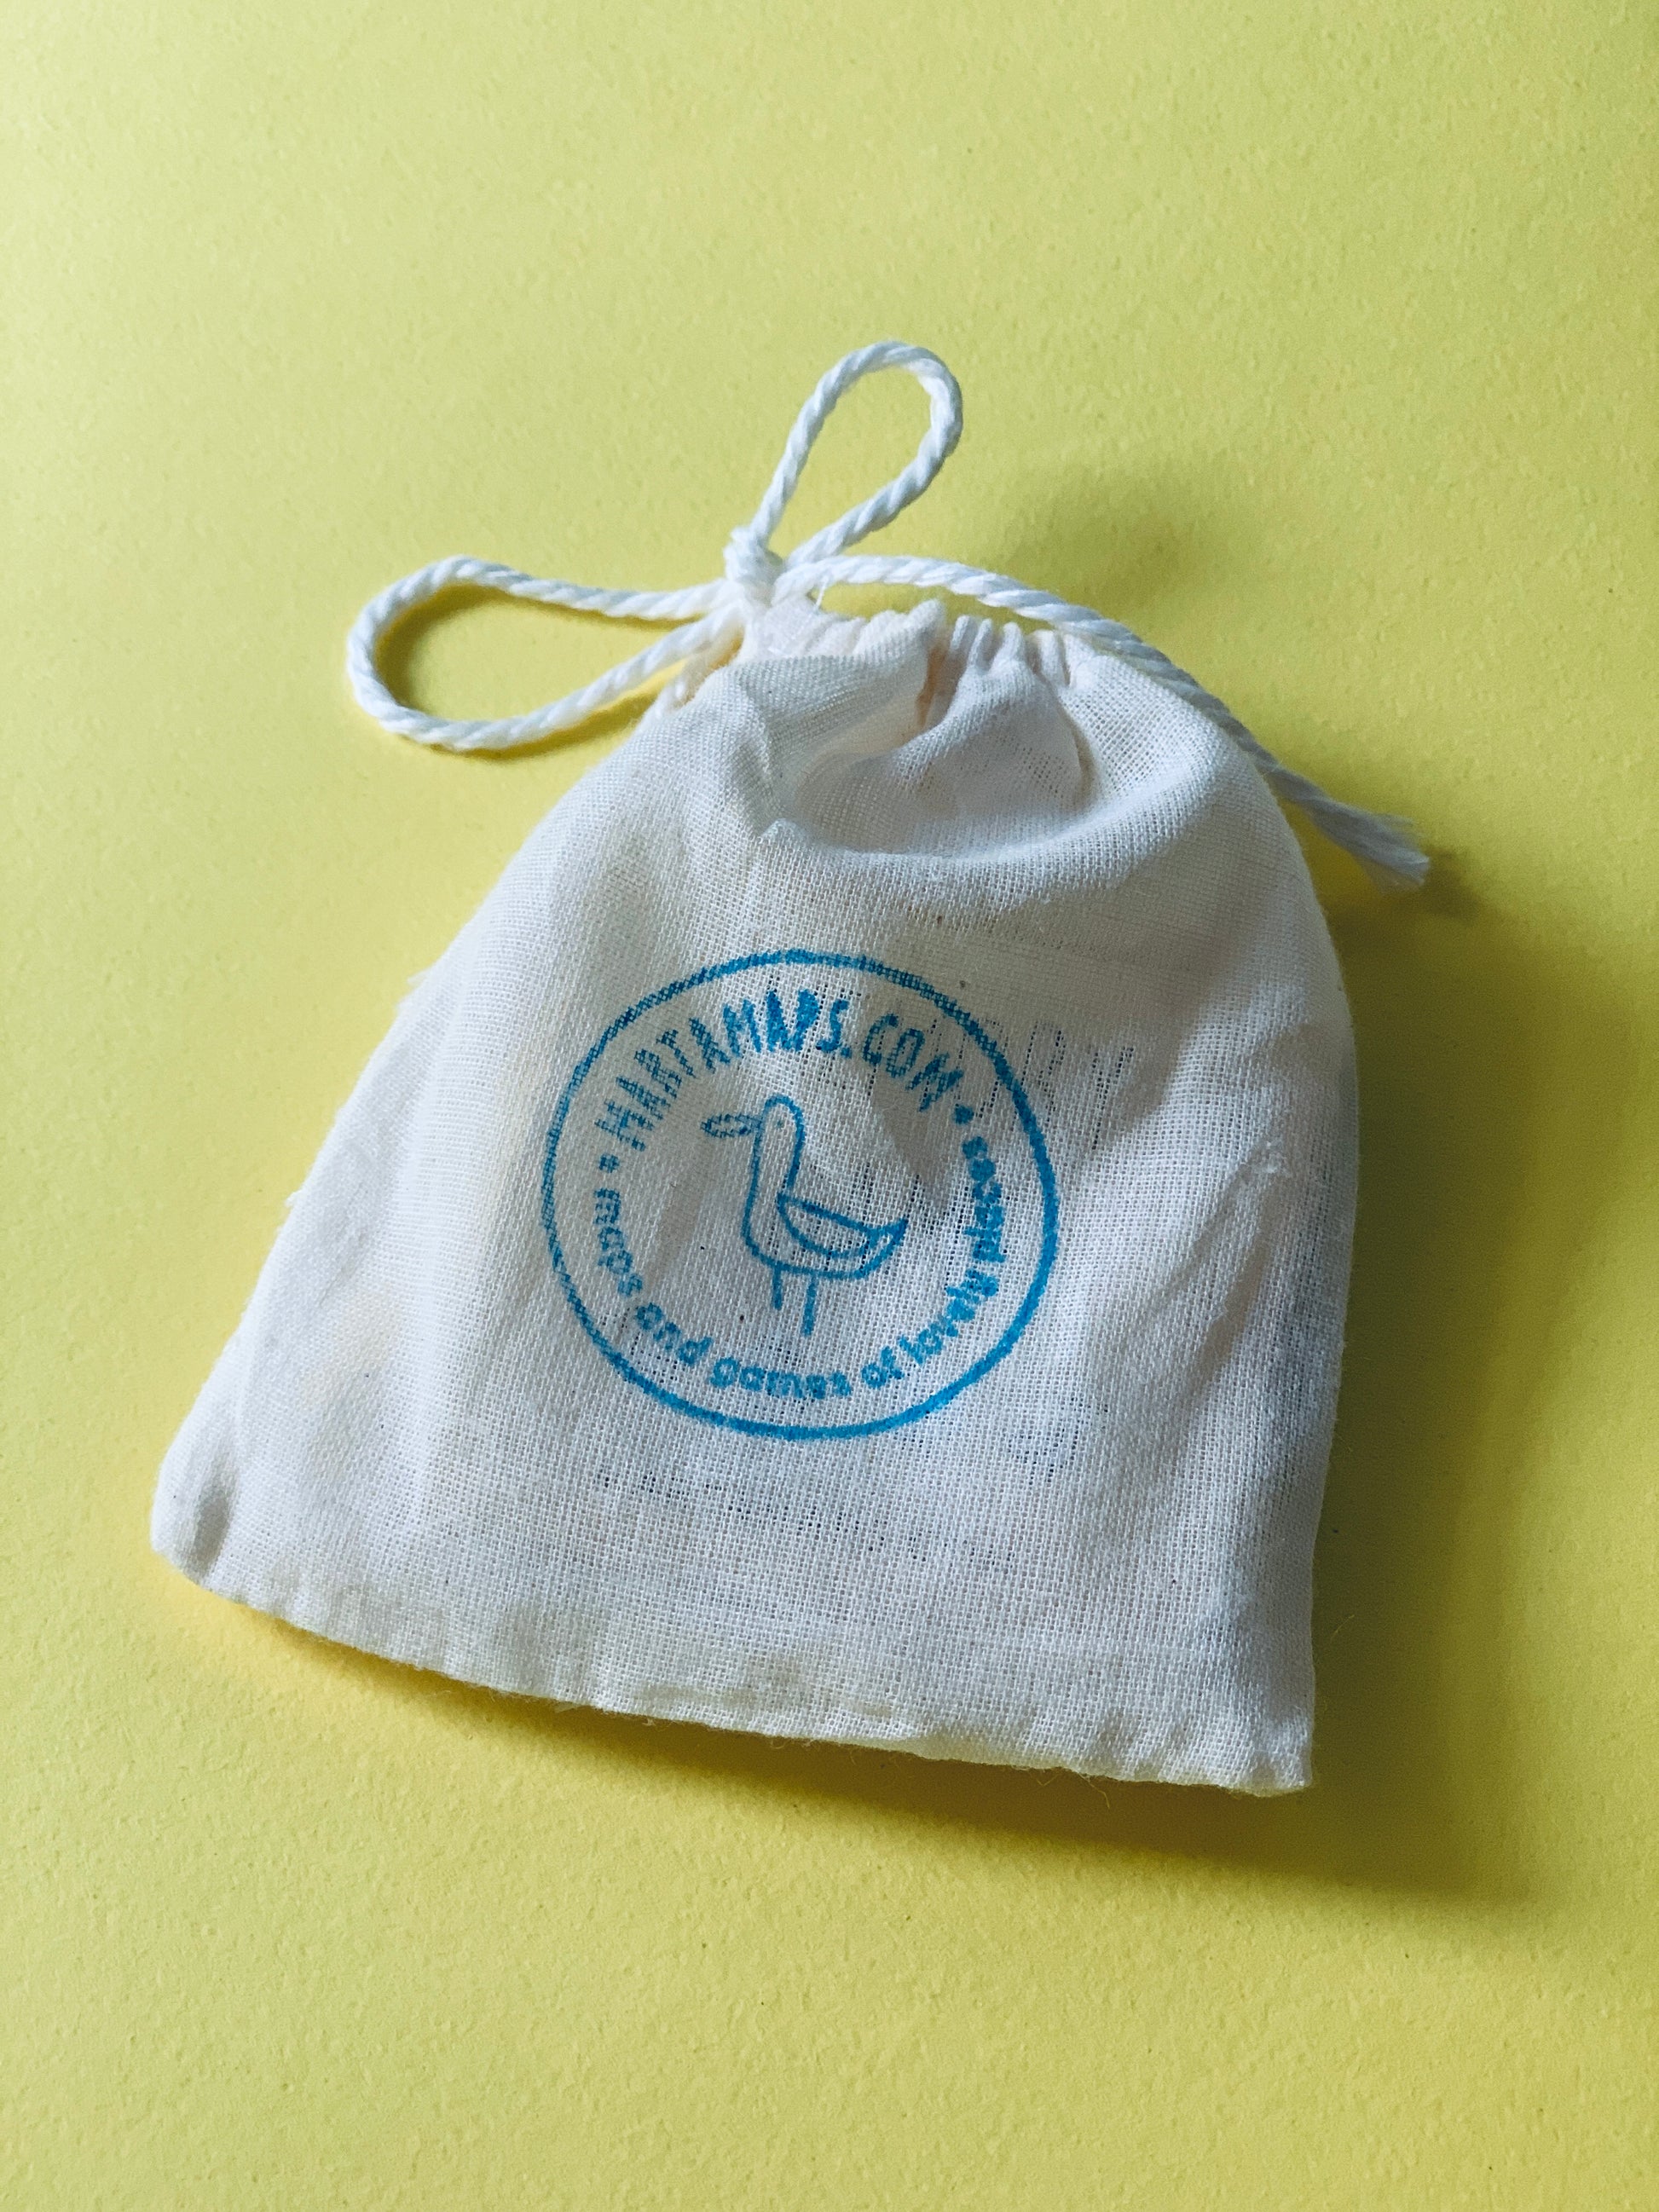 Martamaps branded cotton bag for memory game